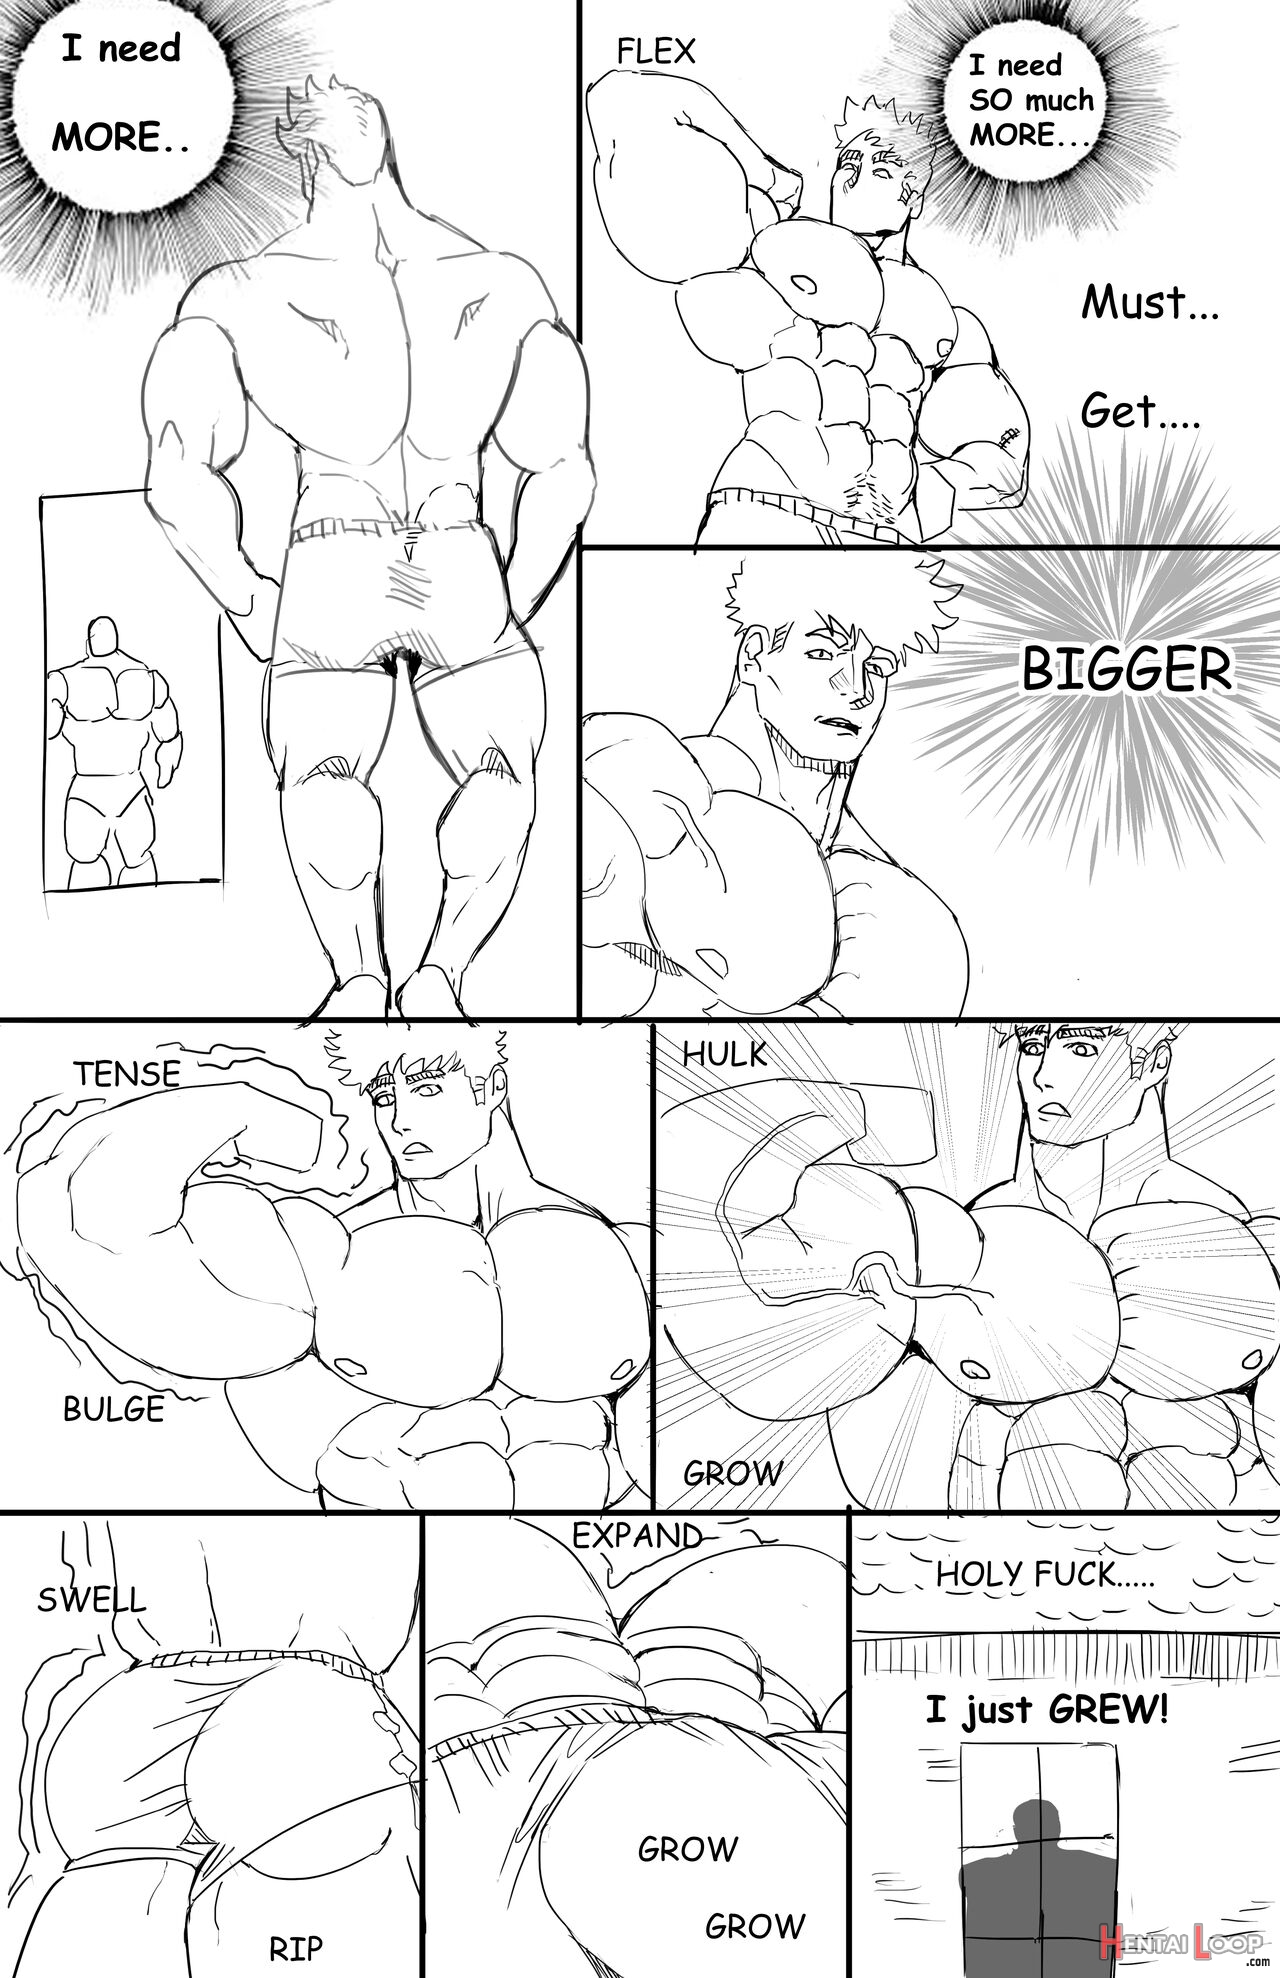 Bigger And Bigger Again page 3